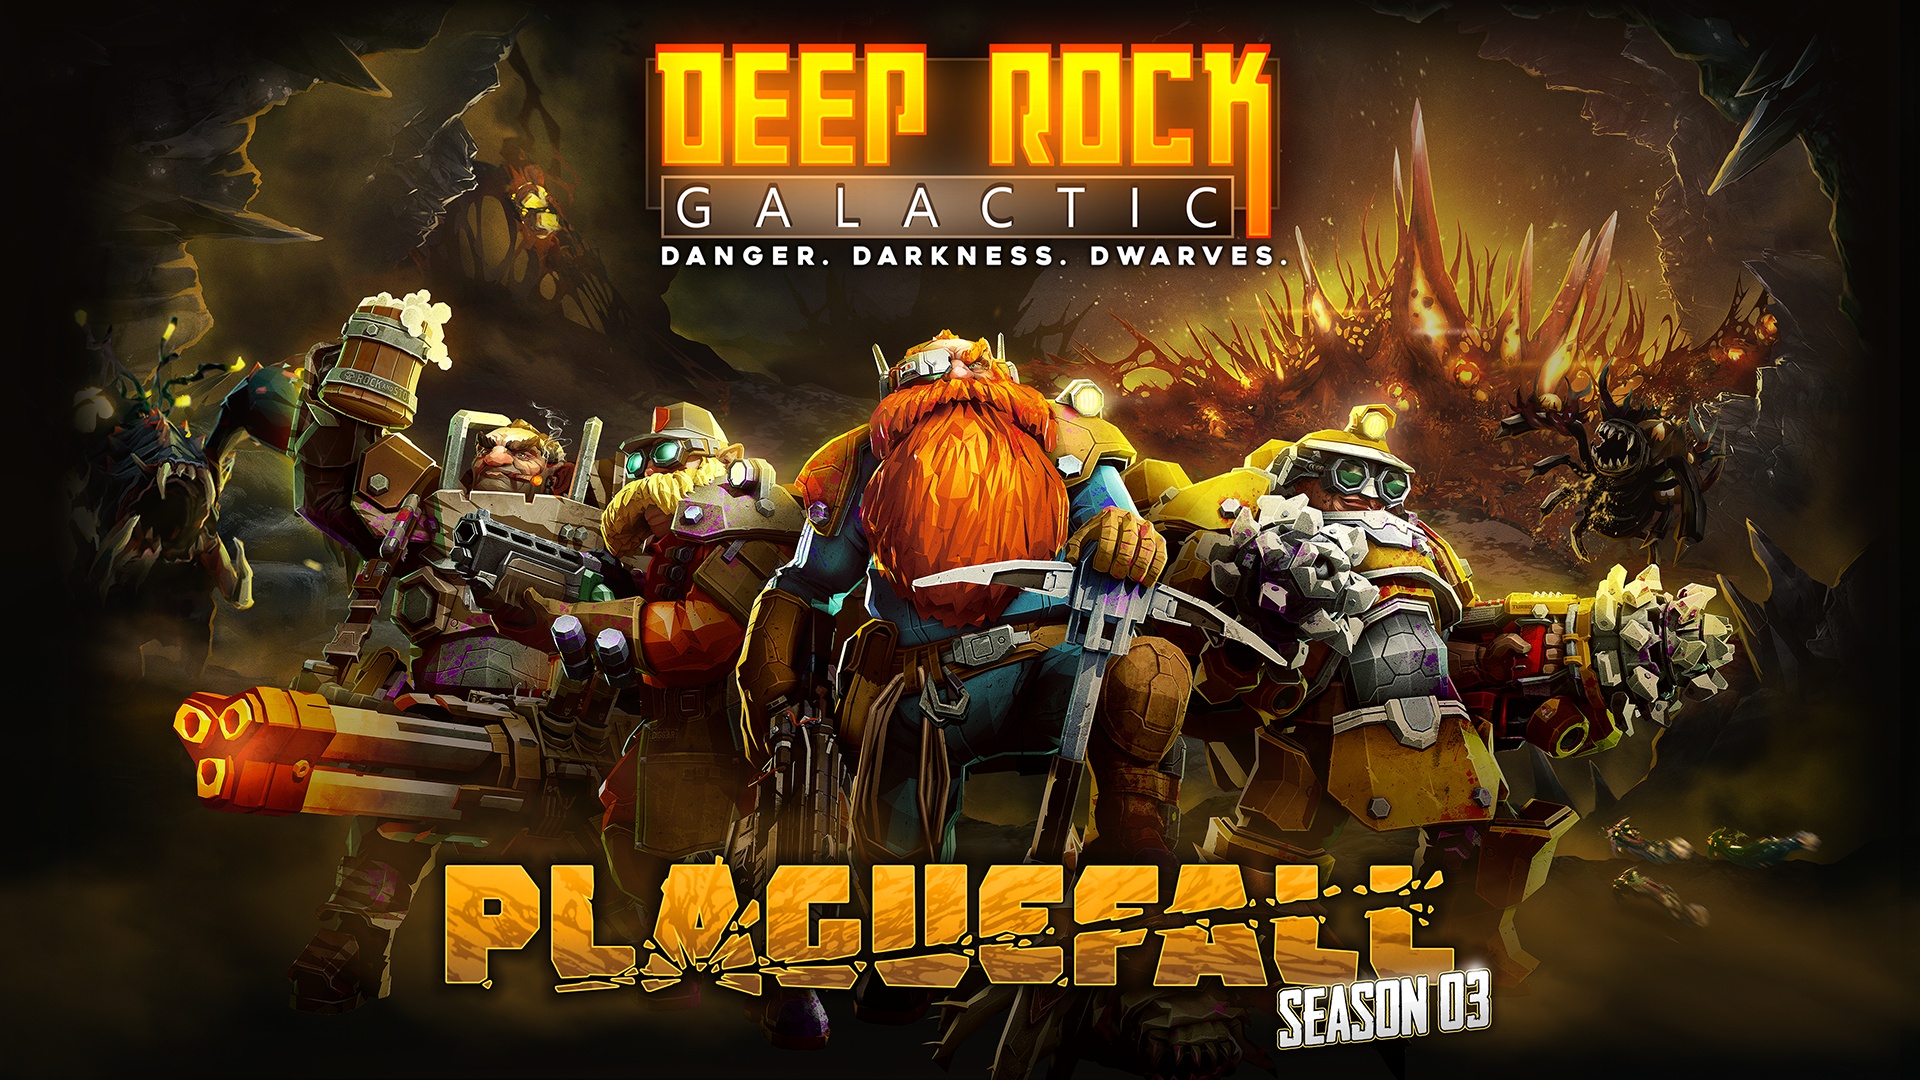 Deep Rock Galactic Season 03: Plaguefall Infects Xbox